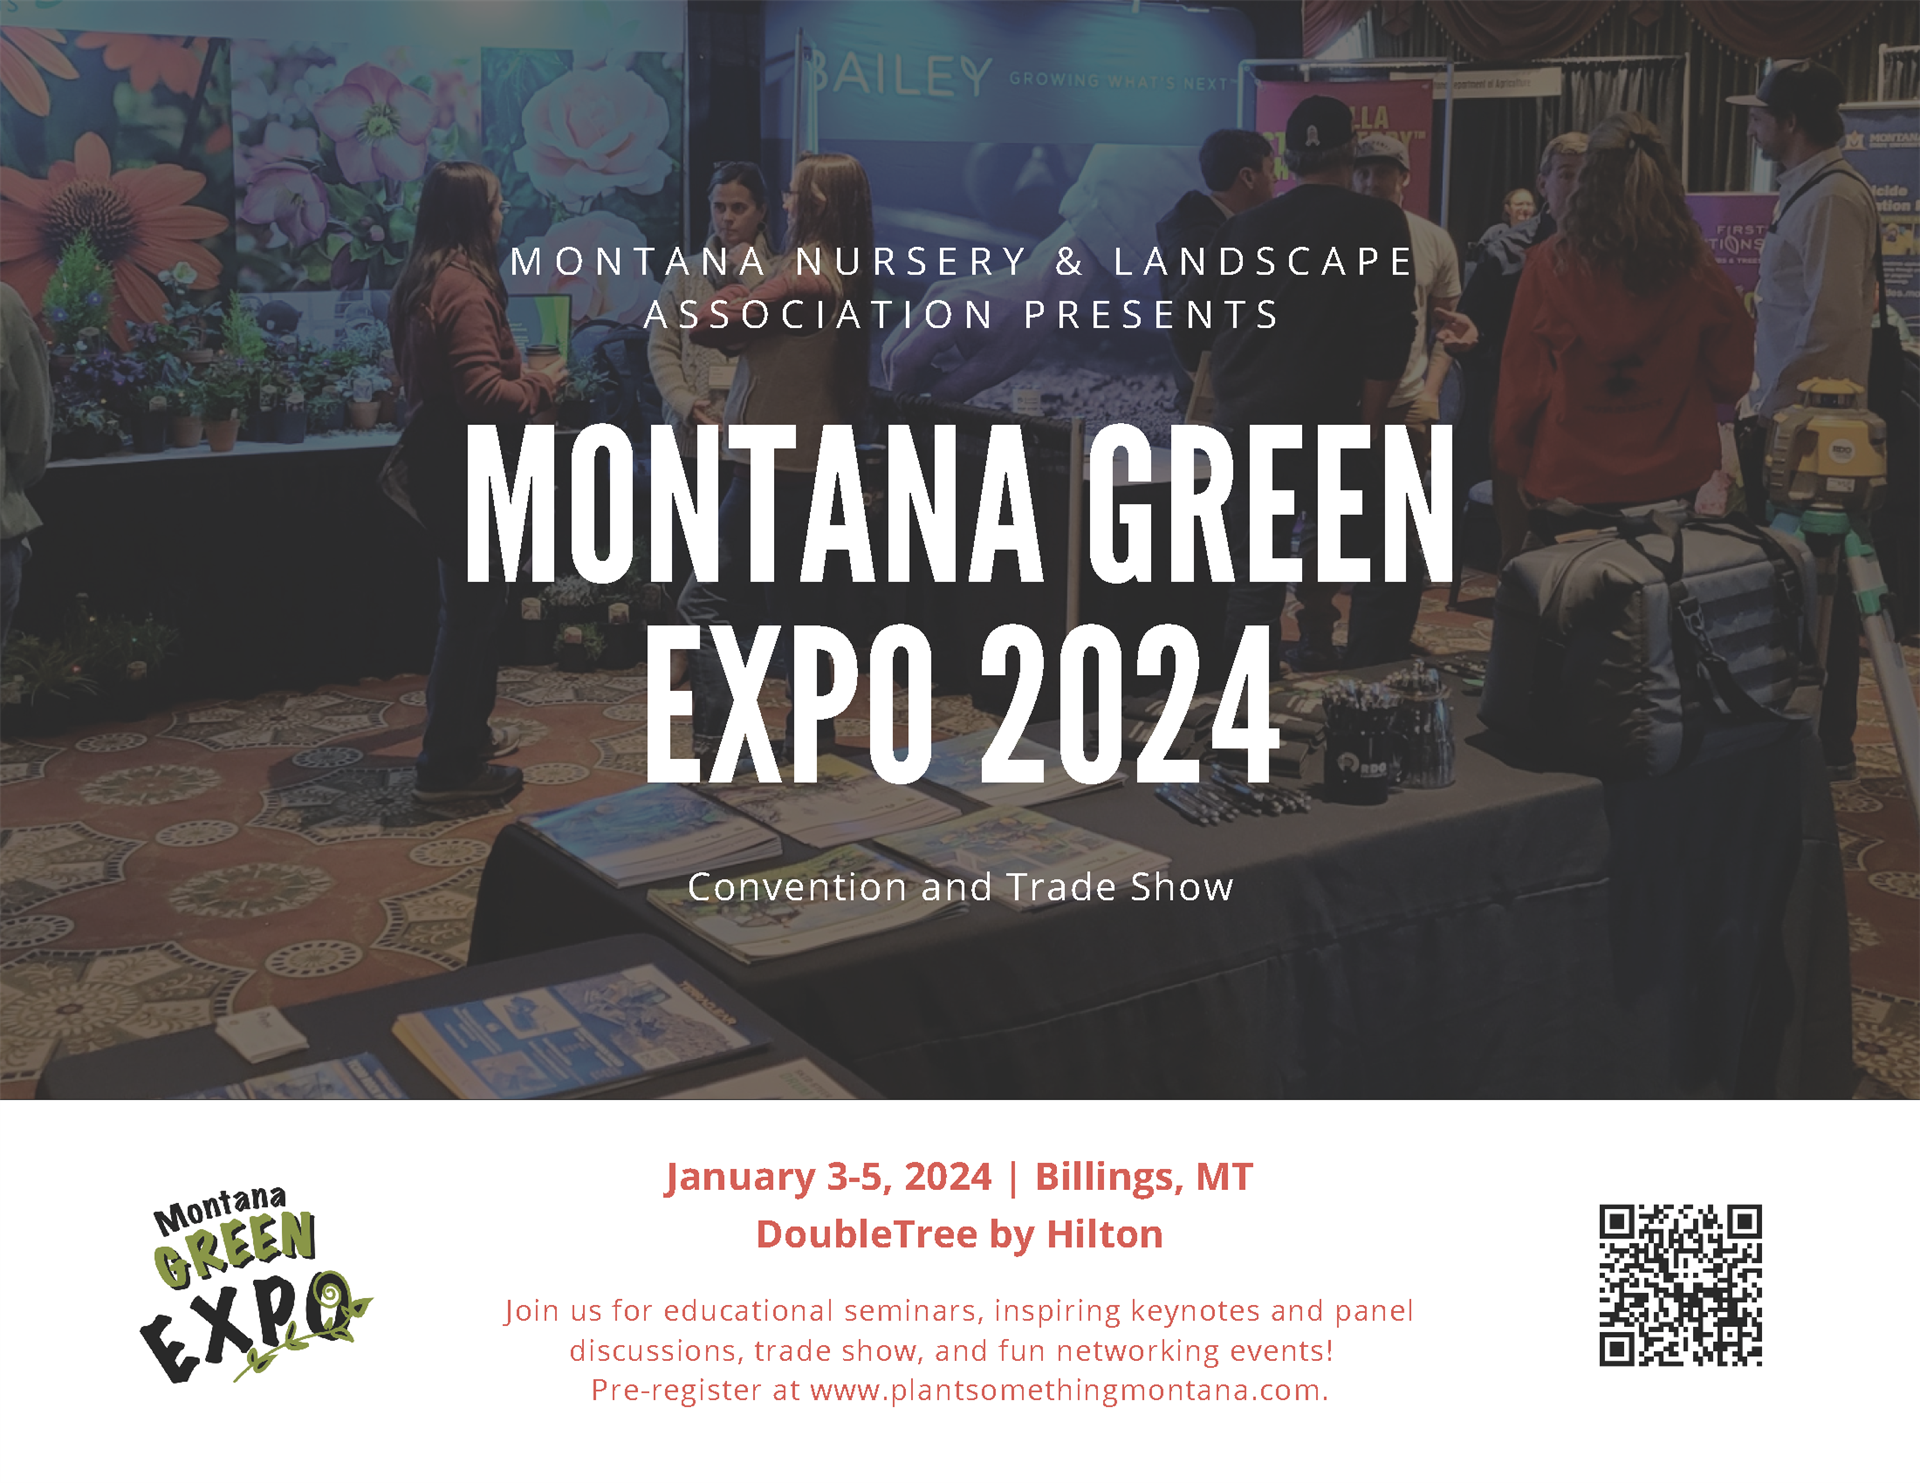 Montana Green Expo - January 3-5, 2024 - Billings, MT